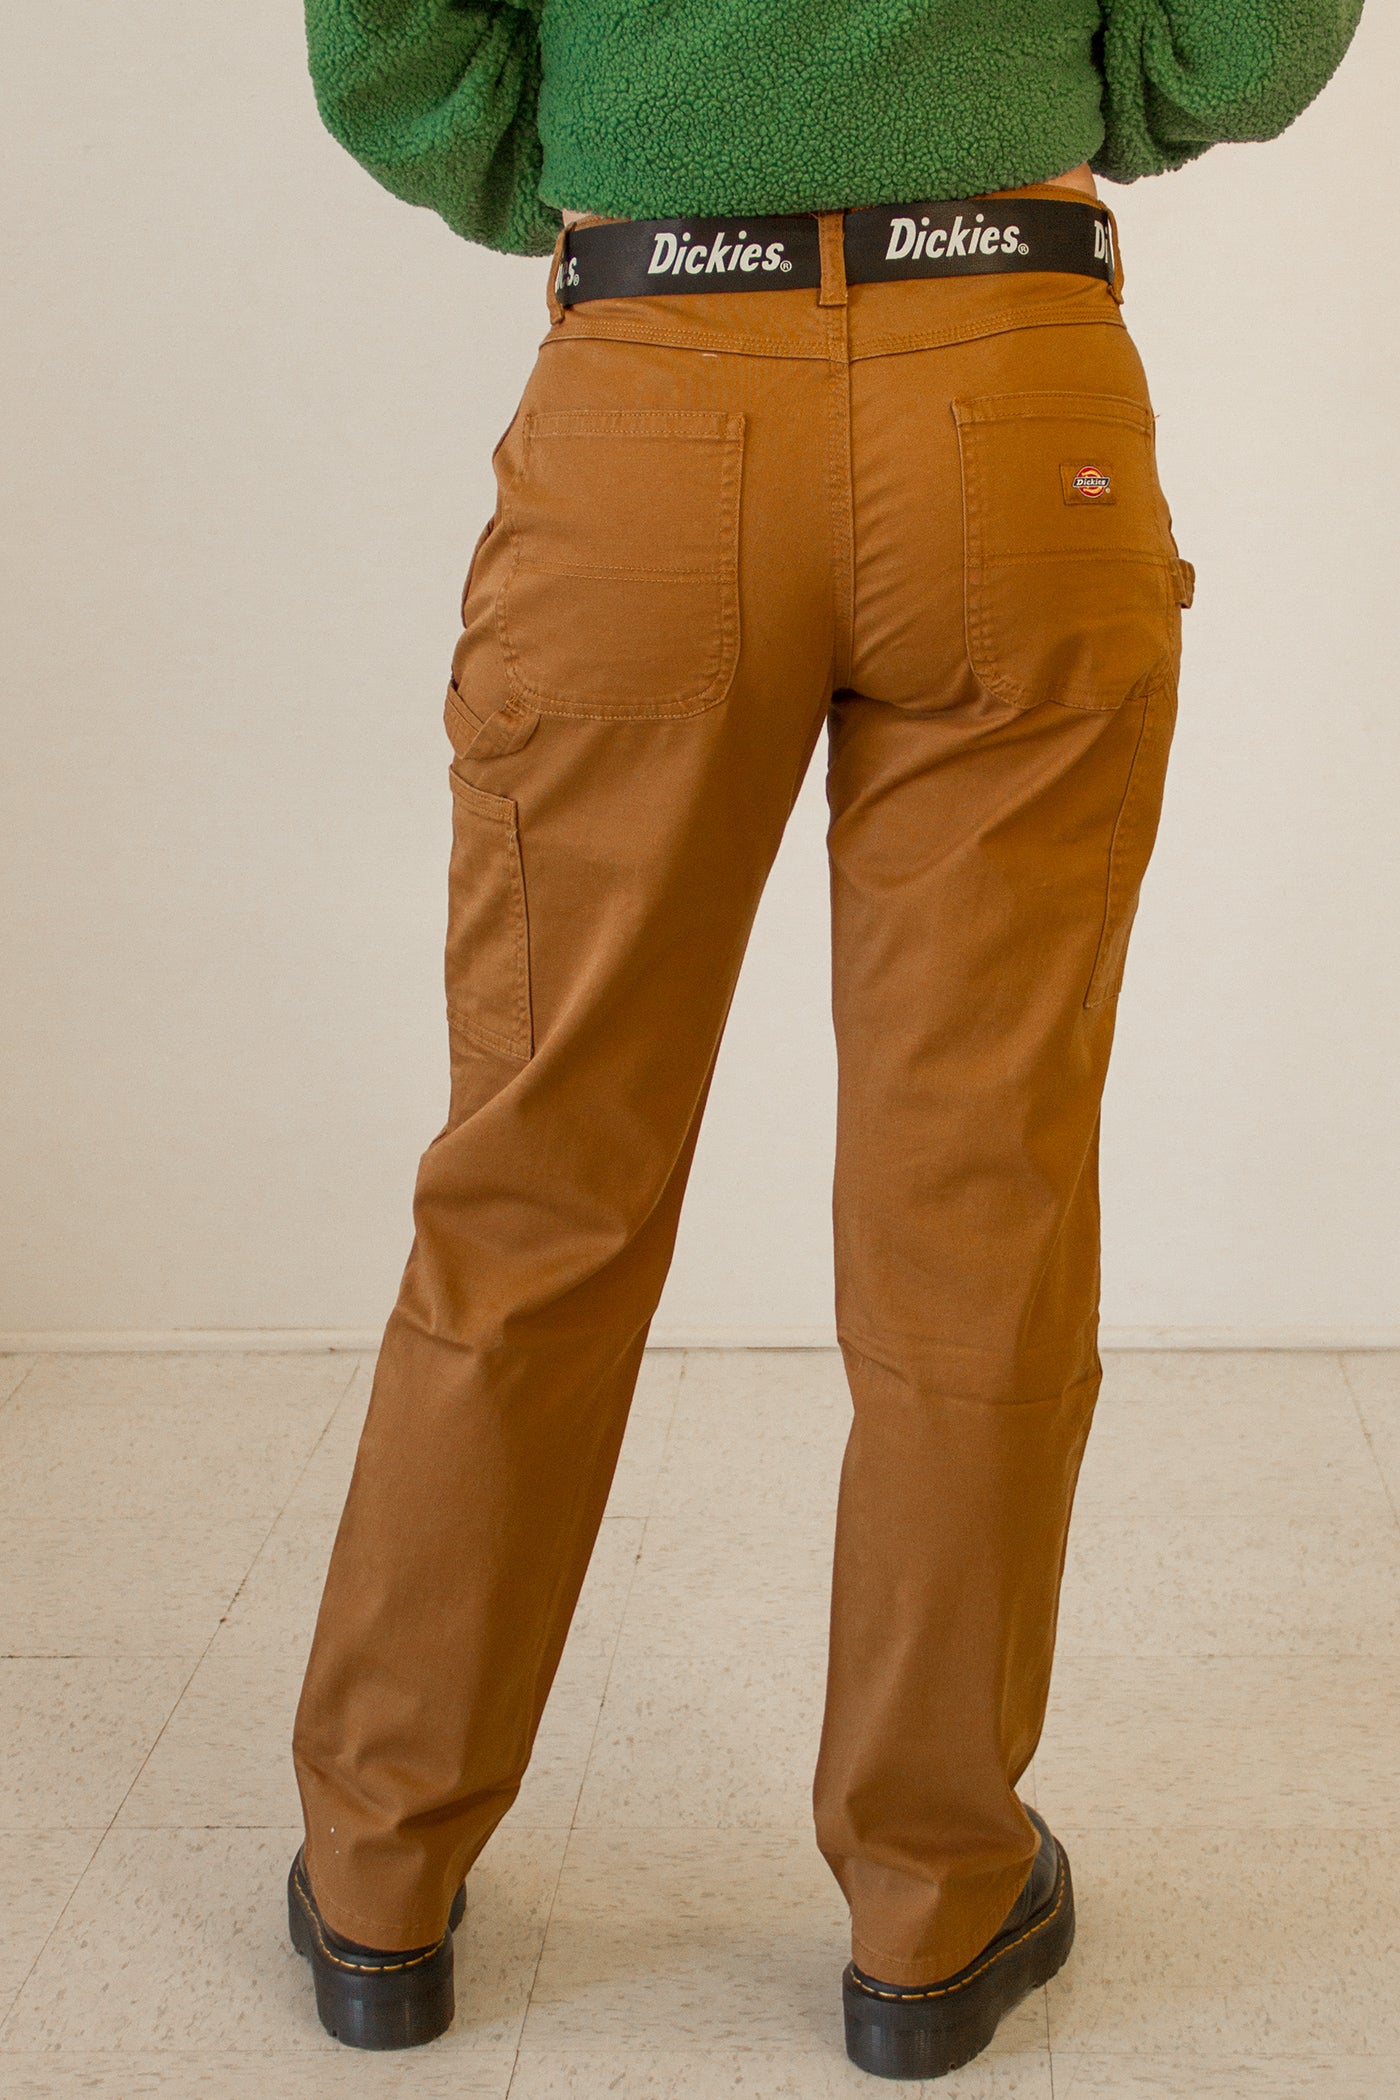 Dickies‎ Tan Carpenter Pants Size 44x30 | Carpenter pants, Dickies, Pants